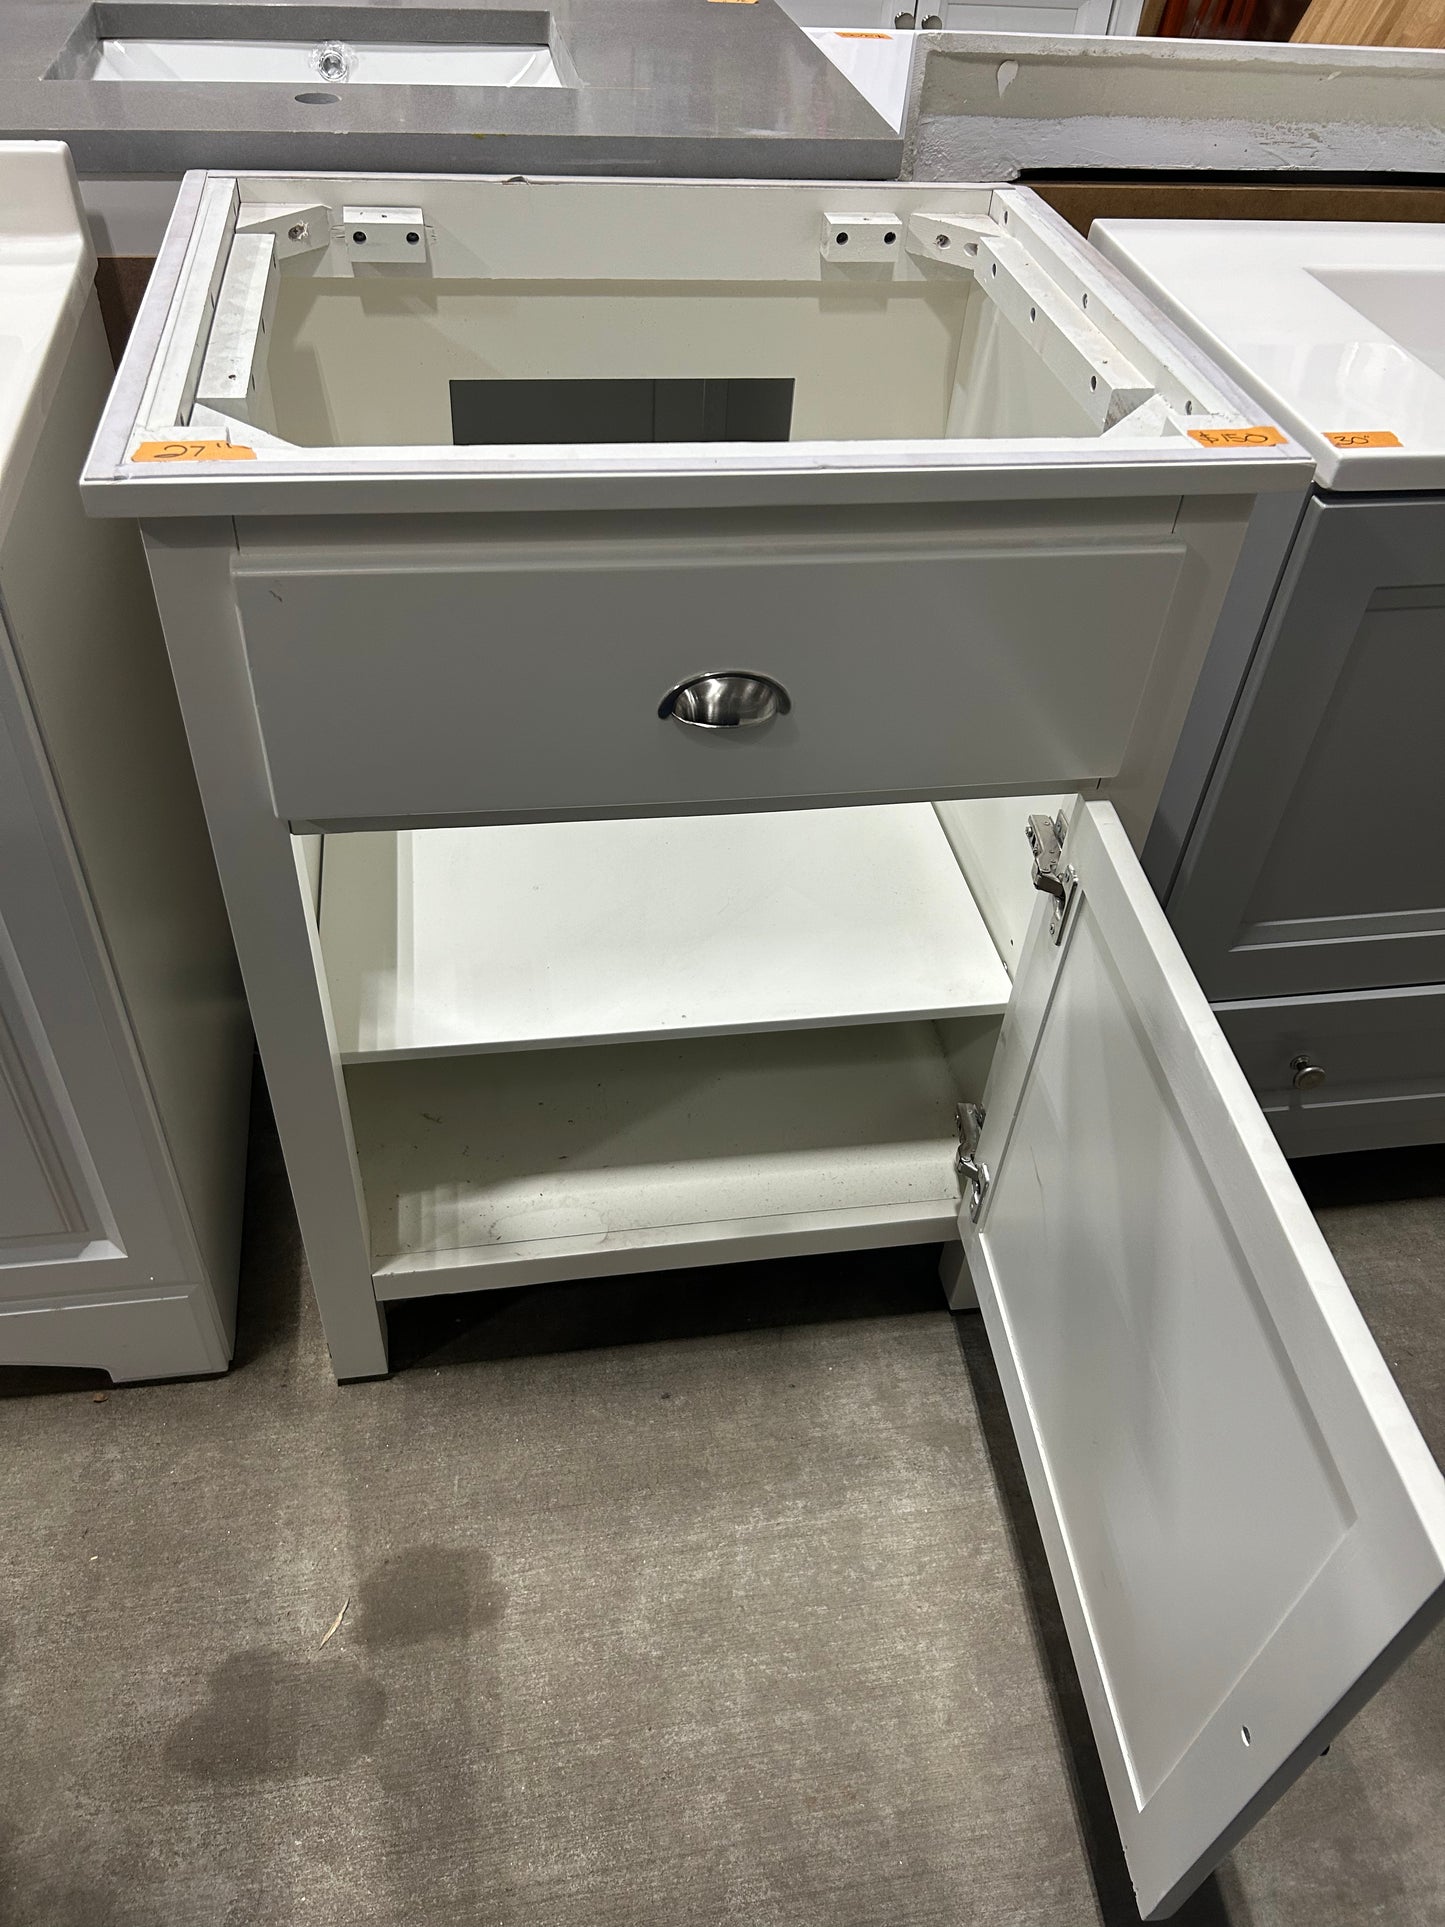 Ridgemore 28 in. W x 22 in. D x 35 in. H Single Sink Freestanding Bath Vanity in White No Top